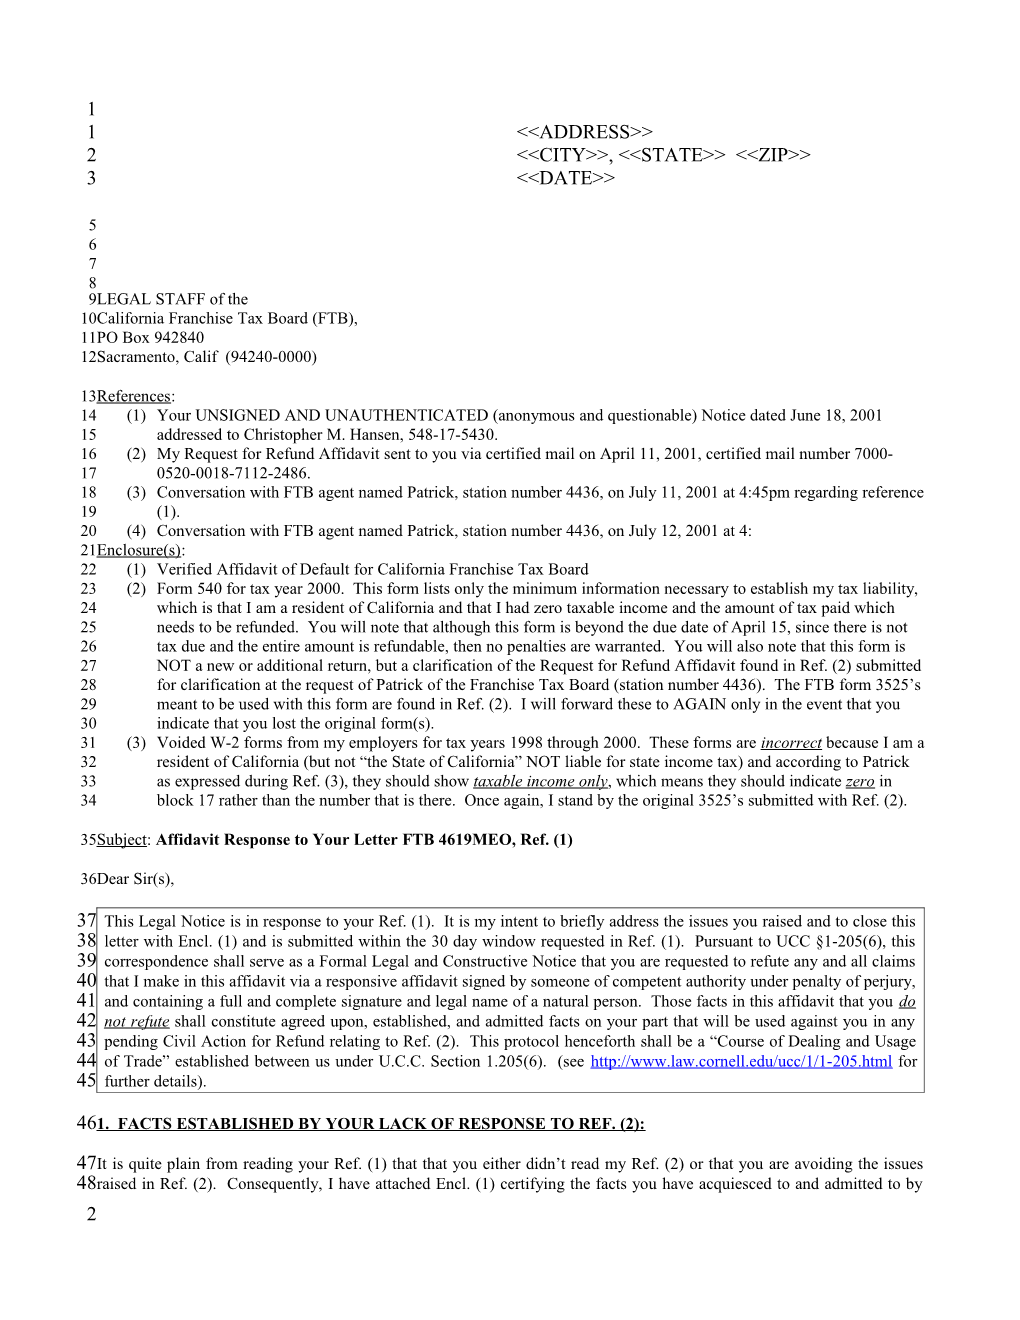 Affidavit Response to Your Letter FTB 4619MEO, Ref. (1)1 of 19